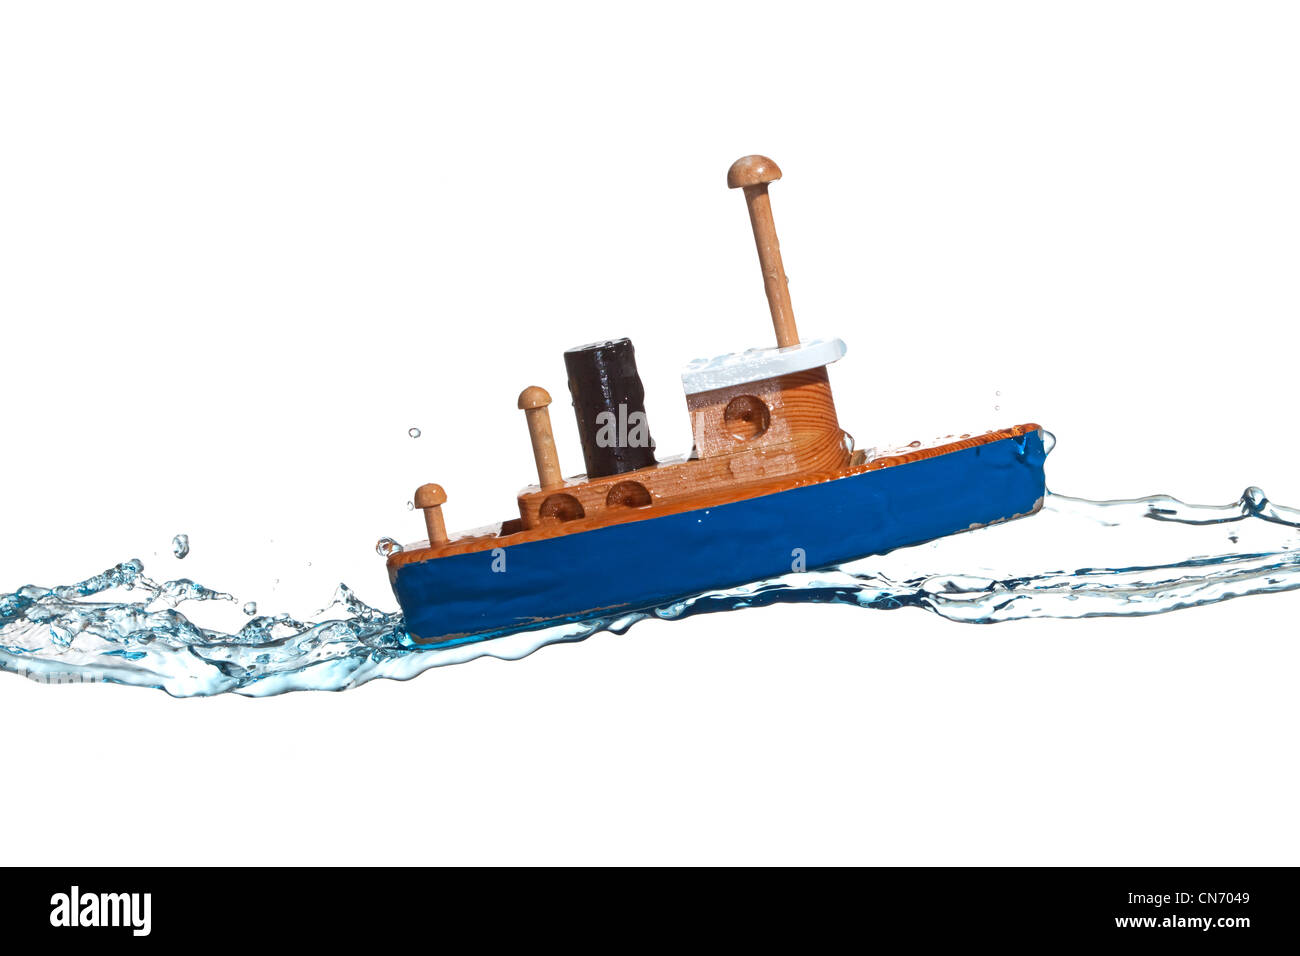 Barco de juguete salpicado con agua Foto de stock